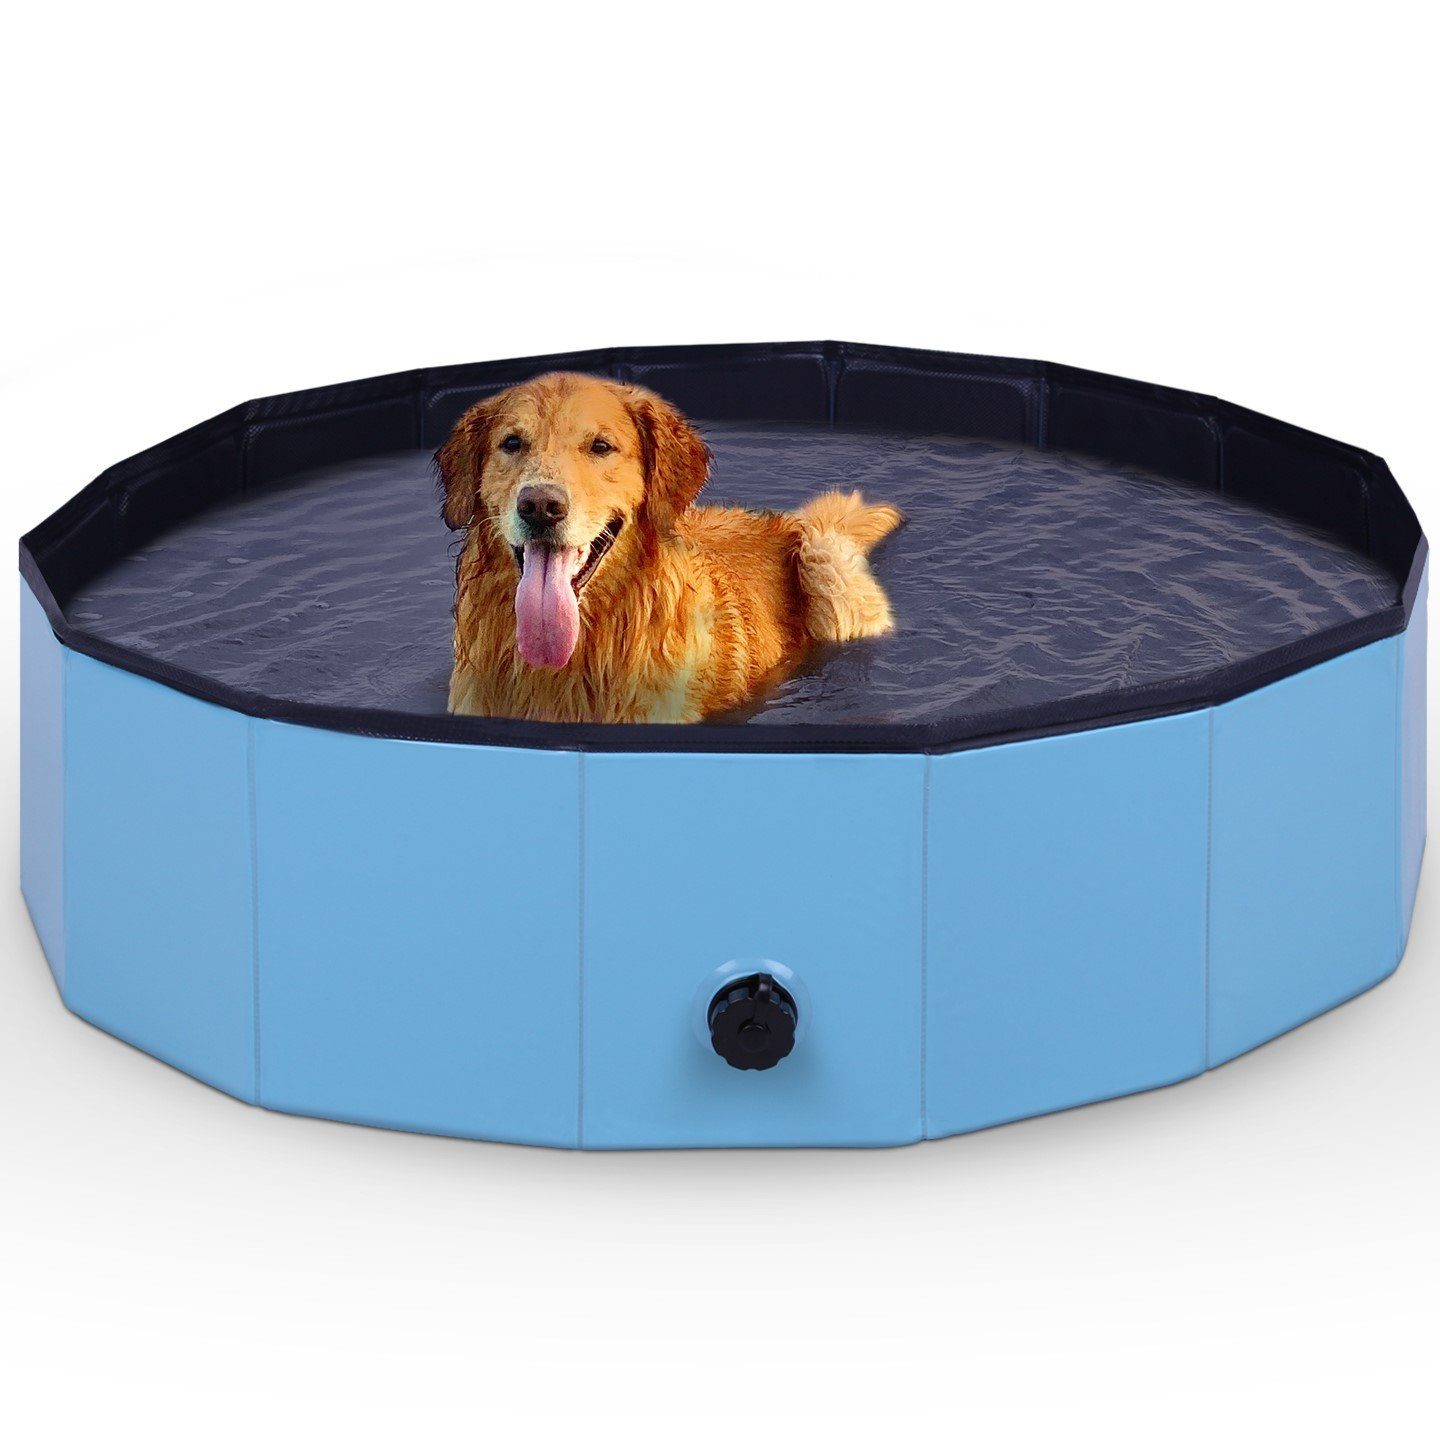 Bestlivings Hundepool Faltbarer Pool für Hunde, (80cm x 20cm), Swimming Pool für Hunde, rutschfester Boden und Ablassventil